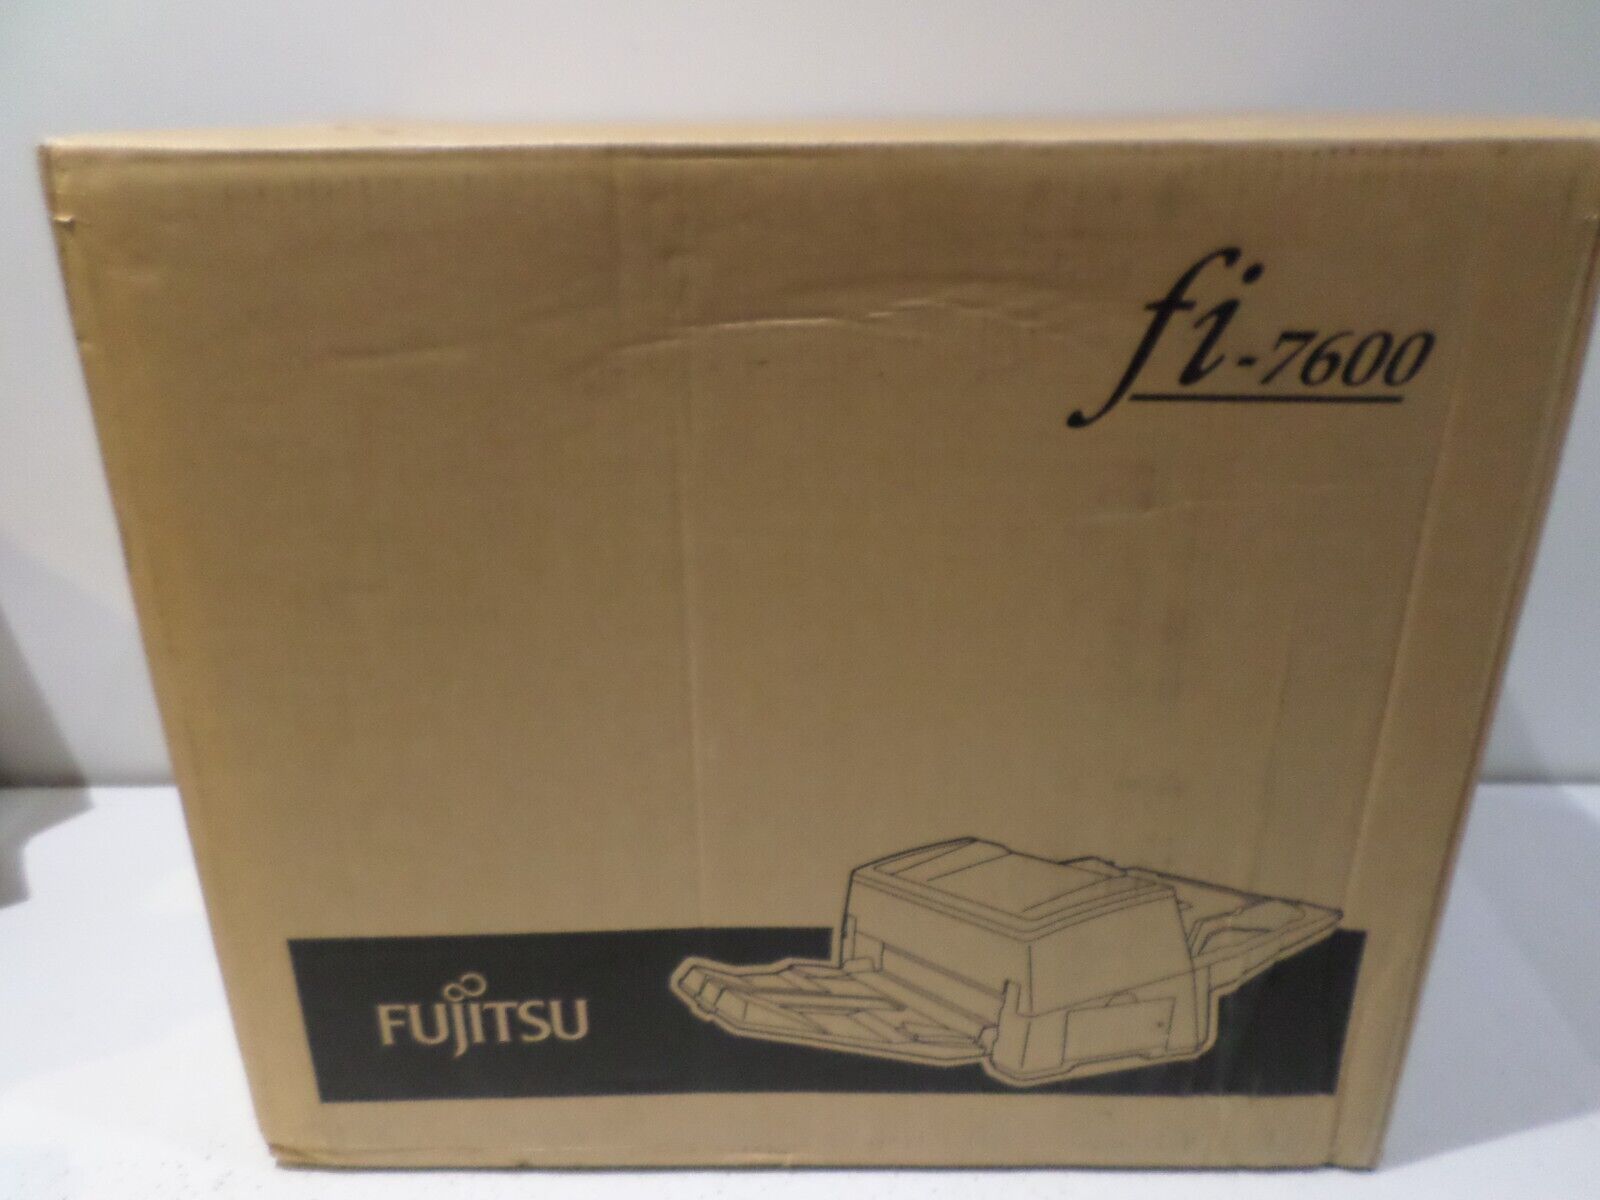 Fujitsu FI-7600 Duplex 600 DPI x 600 DPI Production-class ADF Document Scanner